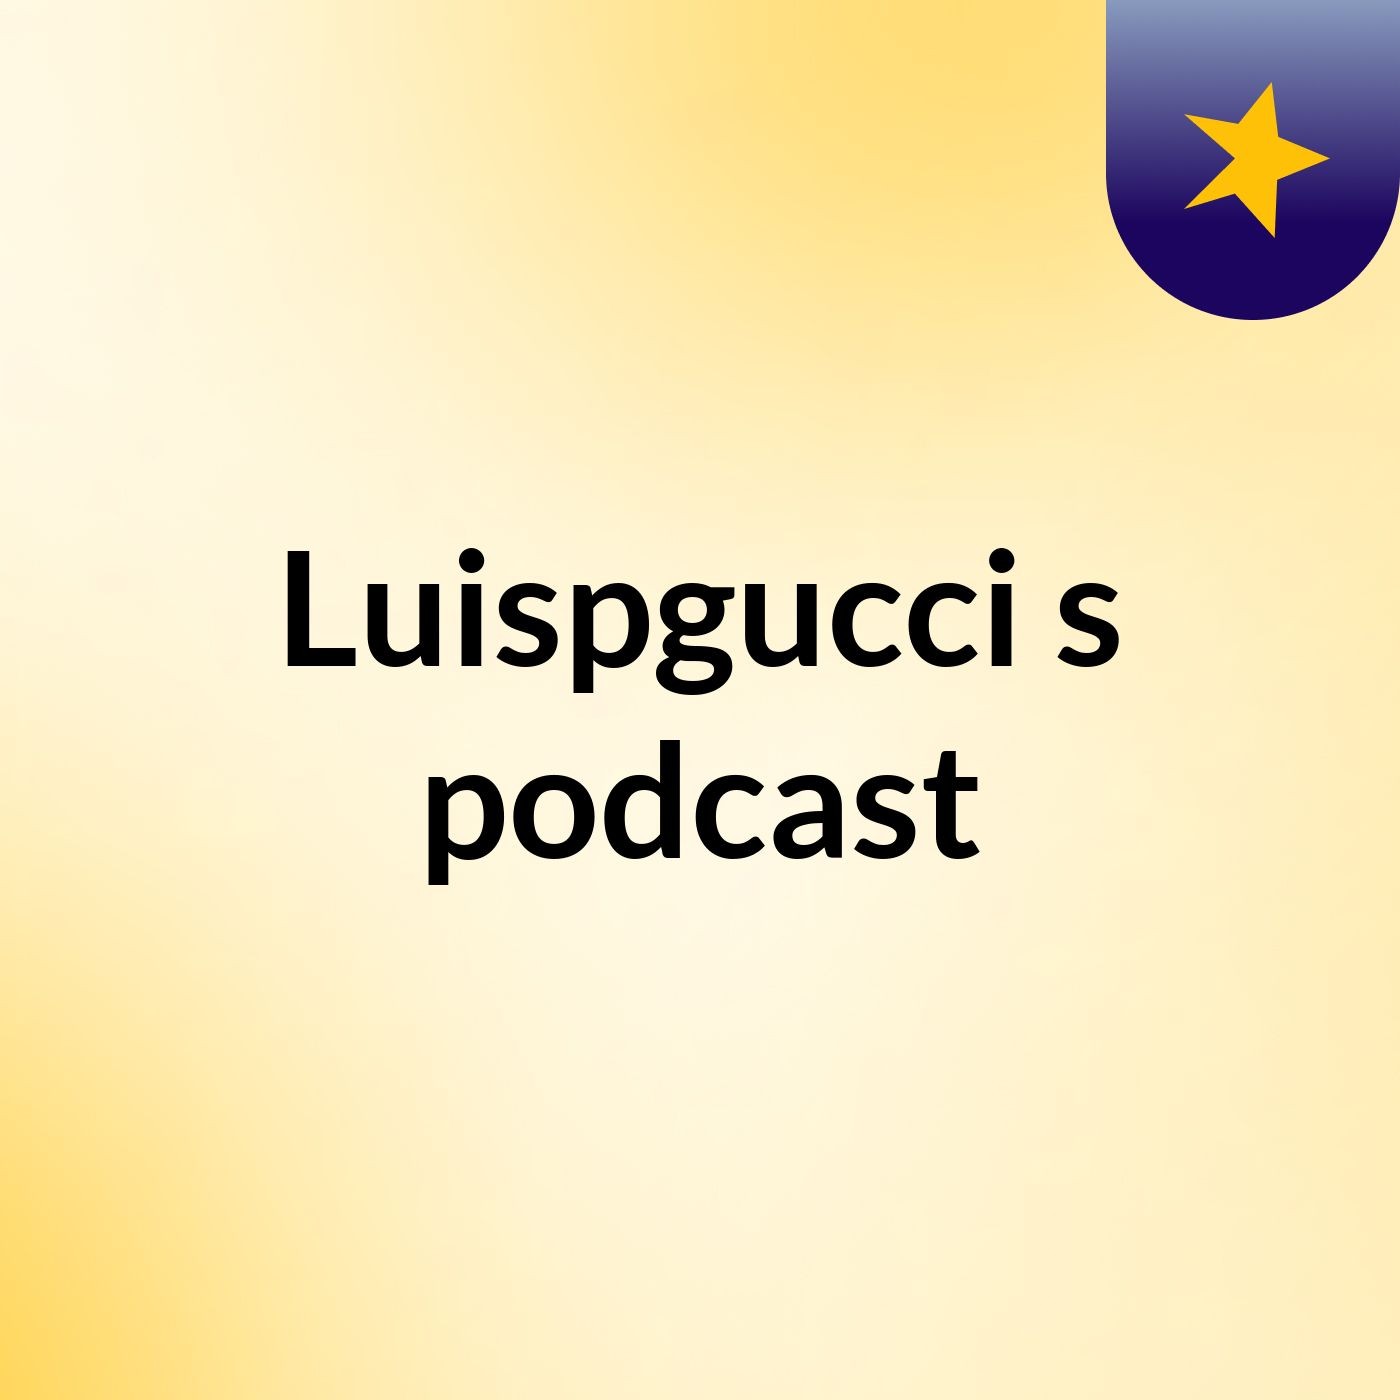 Episode 10 - Luispgucci's podcast